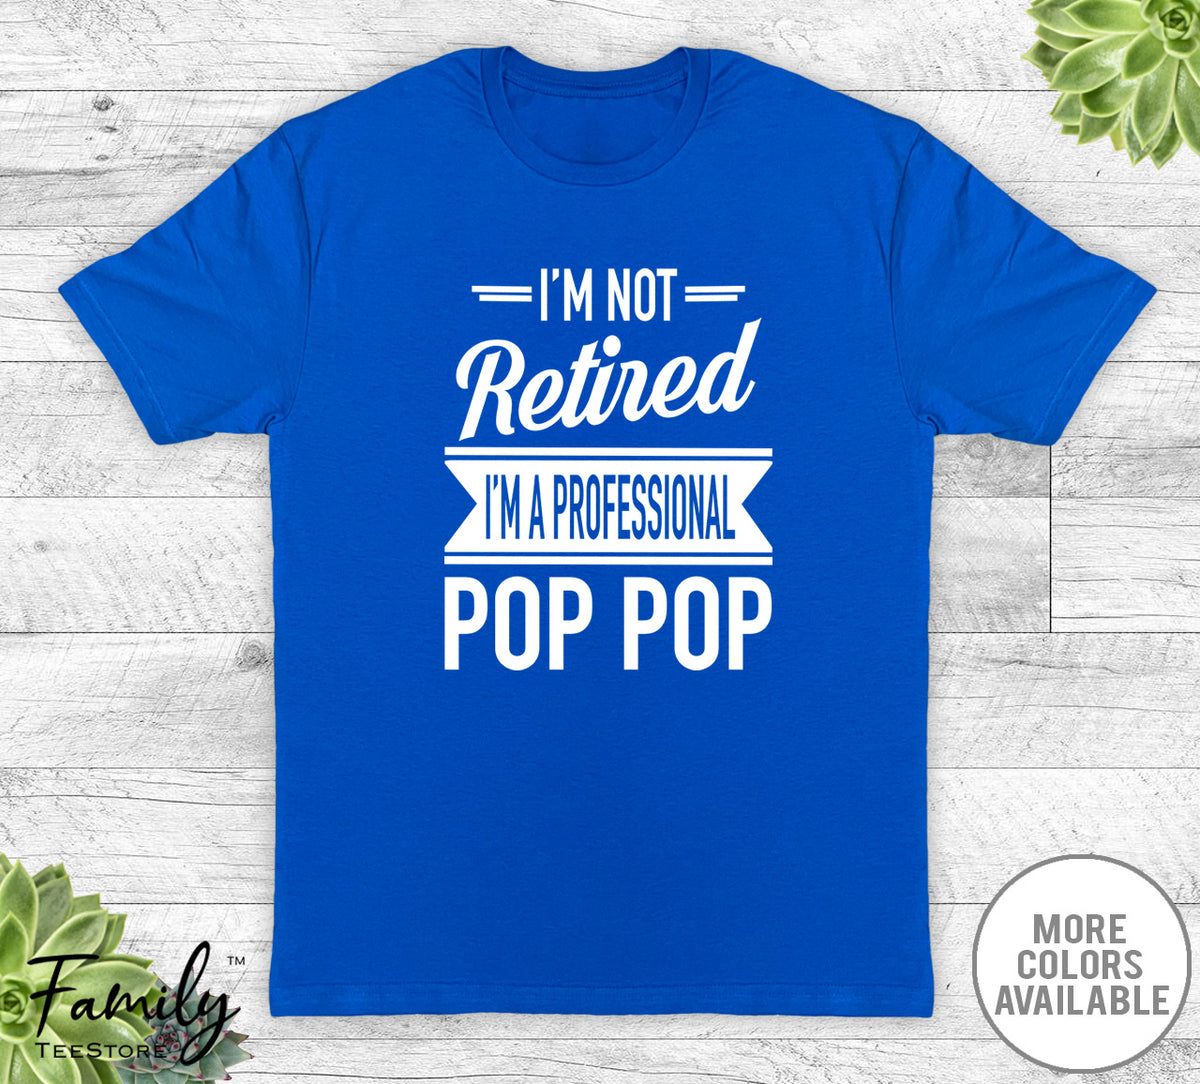 I'm Not Retired I'm A Professional Pop Pop - Unisex T-shirt - Pop Pop Shirt - Pop Pop Gift - familyteeprints